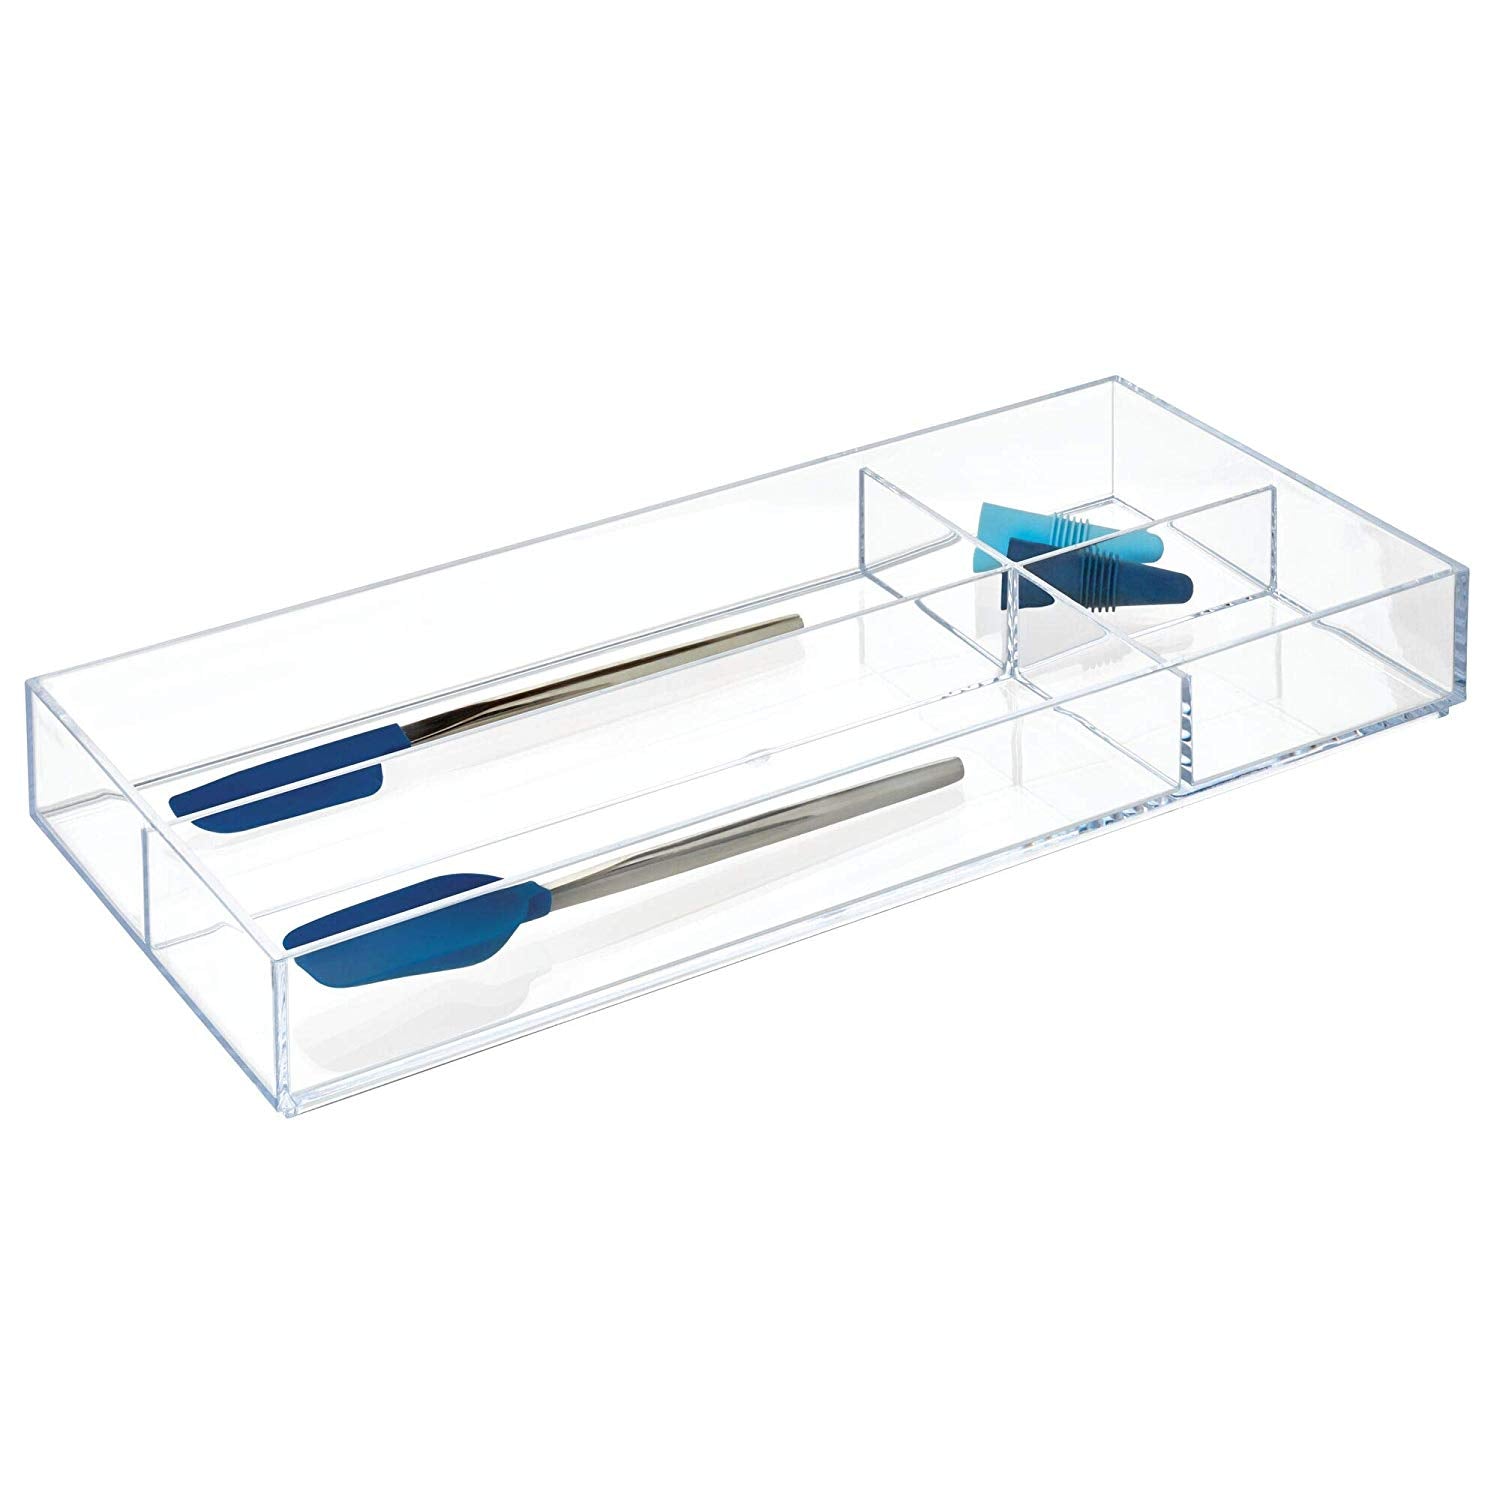 iDesign Clarity Kitchen Drawer Organizer for Silverware, Spatulas, Gadgets - X-Large, 8" x 16" x 2", Clear